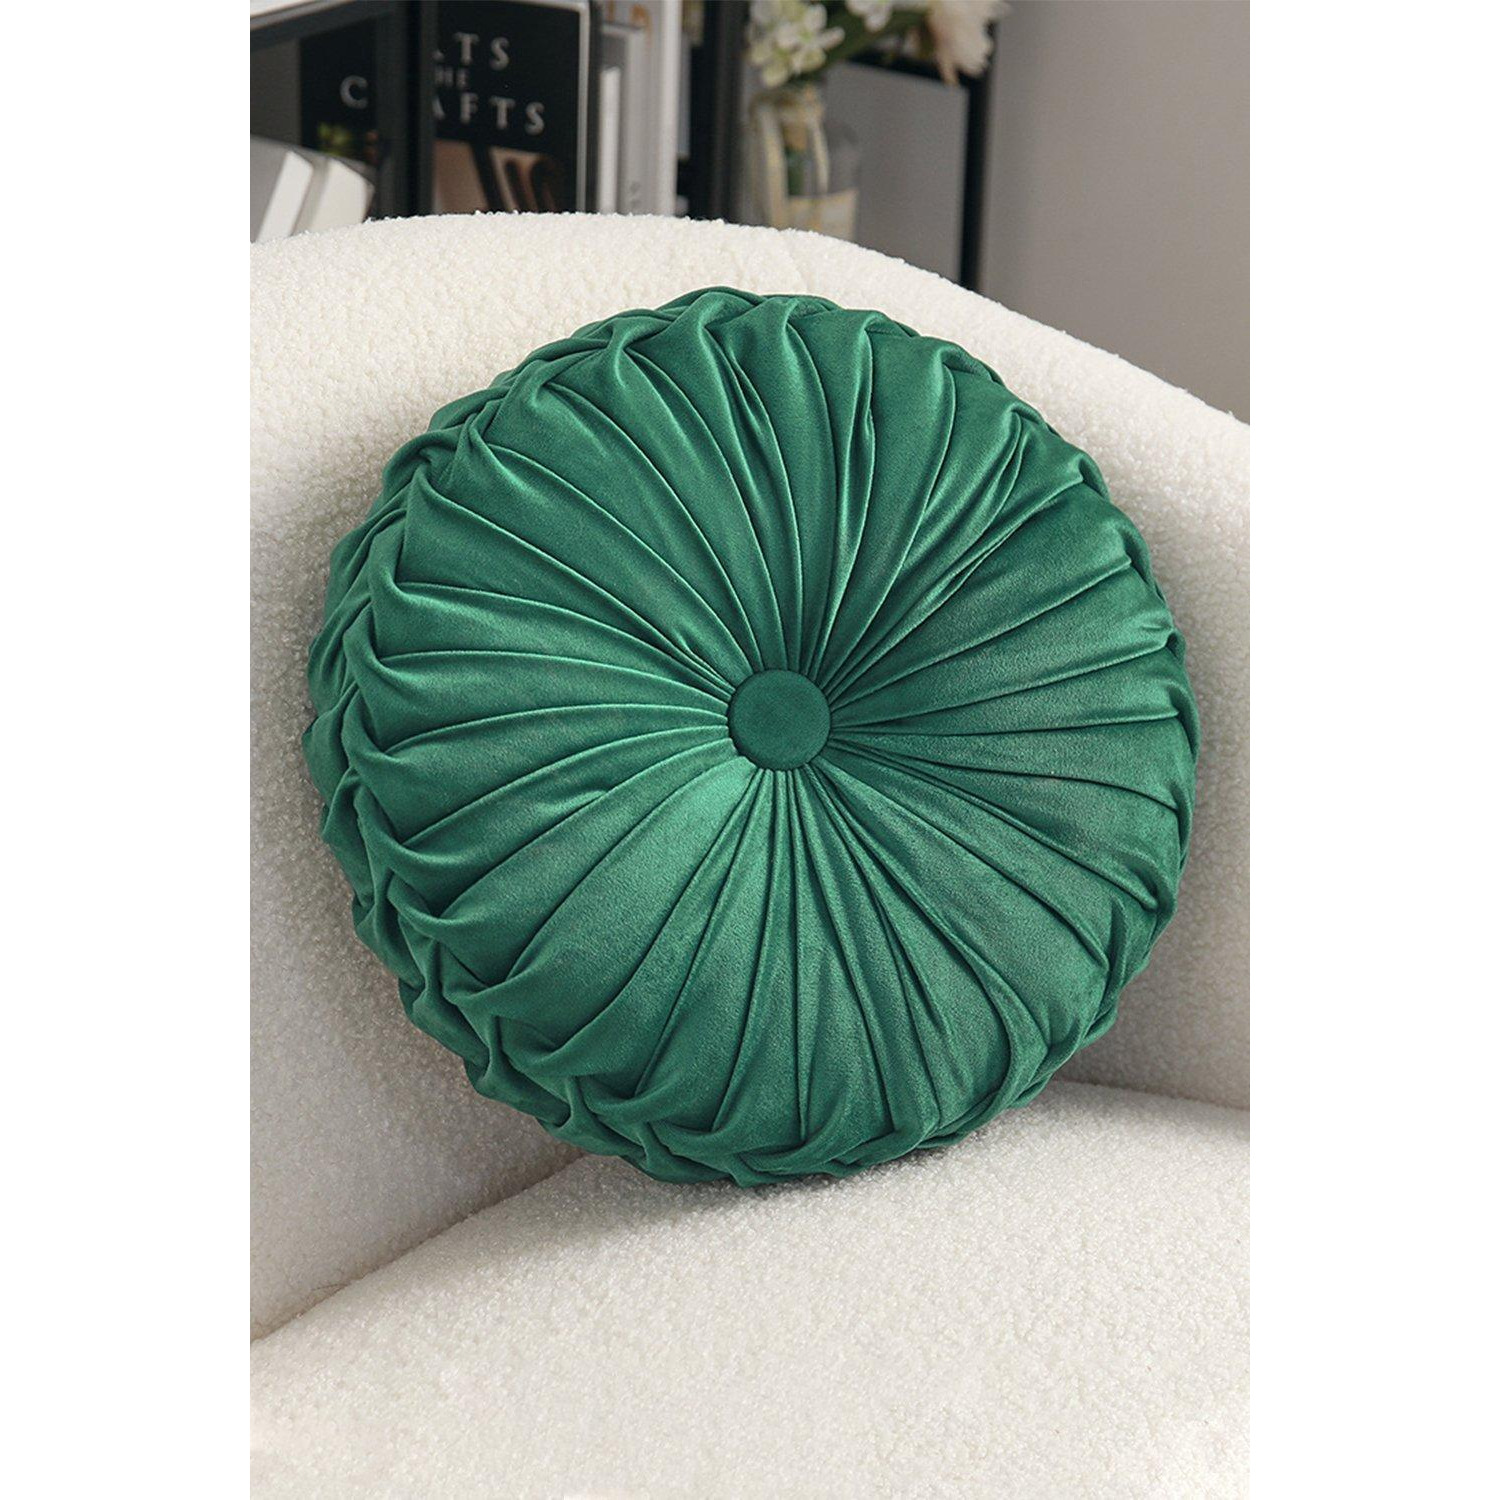 45cm Green Round Velvet Pleated Pumpkin Cushion - image 1